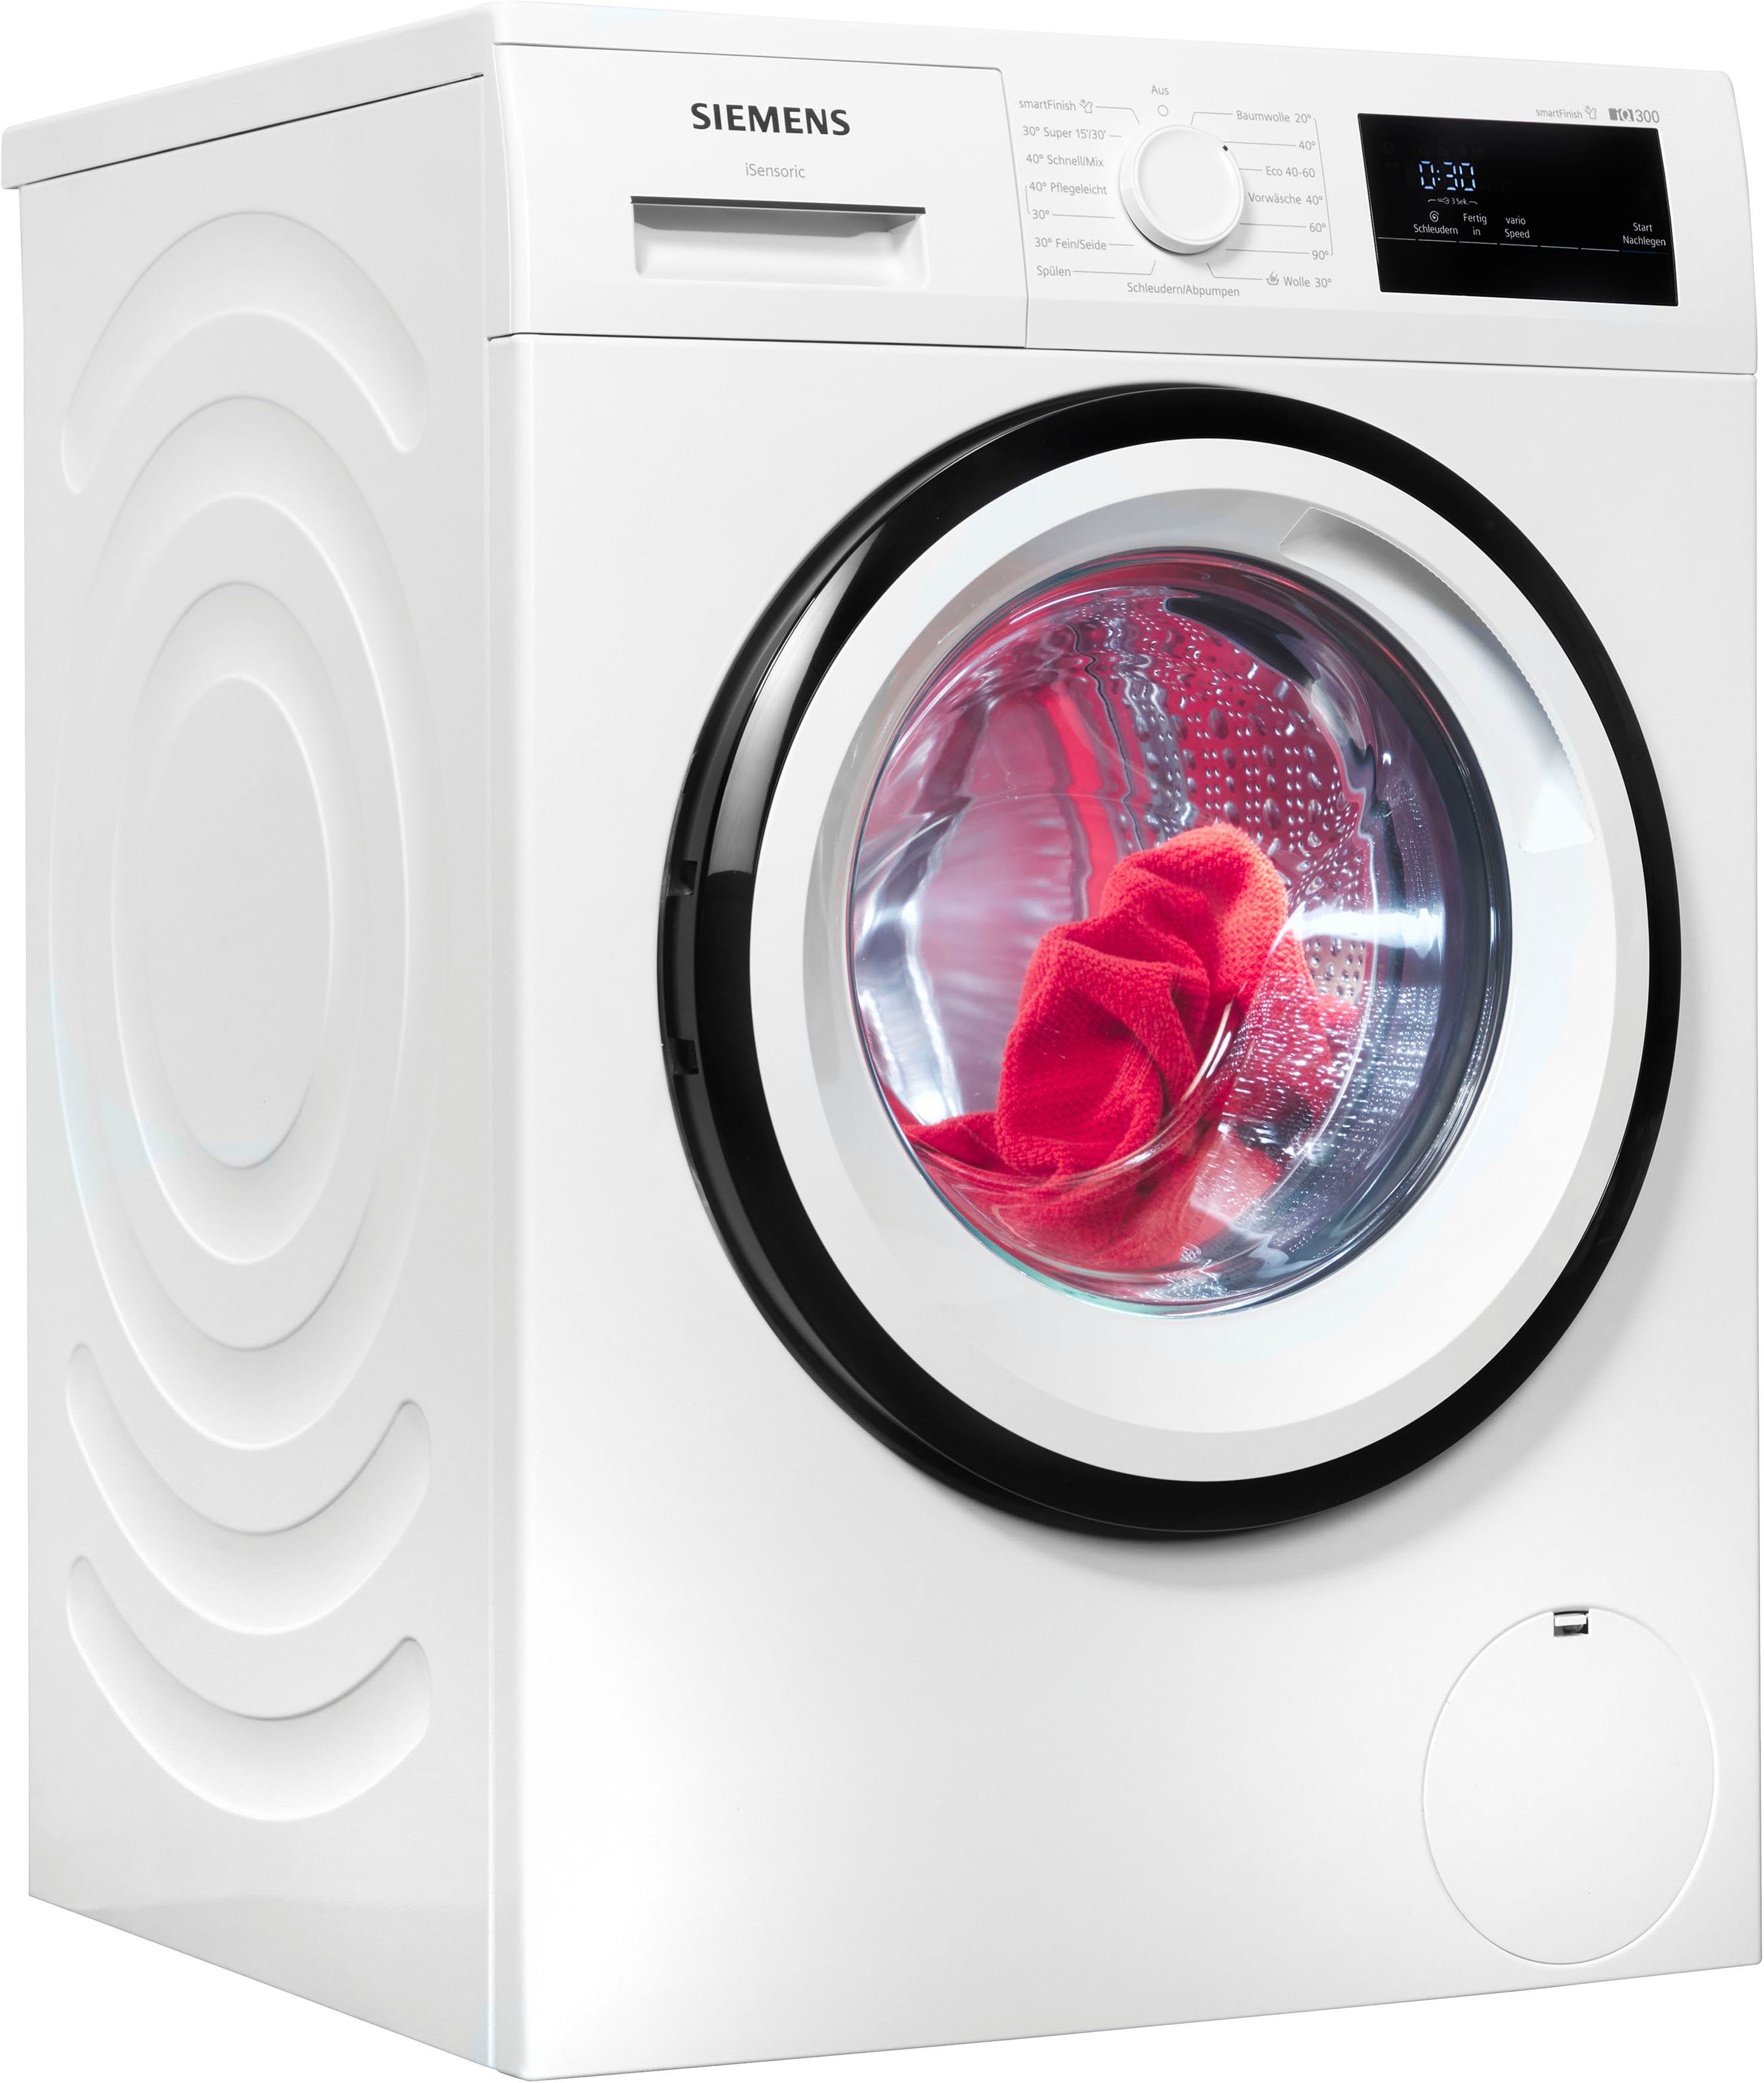 SIEMENS Waschmaschine iQ300 WM14N0A4, 8 kg, 1400 U/min, smartFinish – glättet dank Dampf